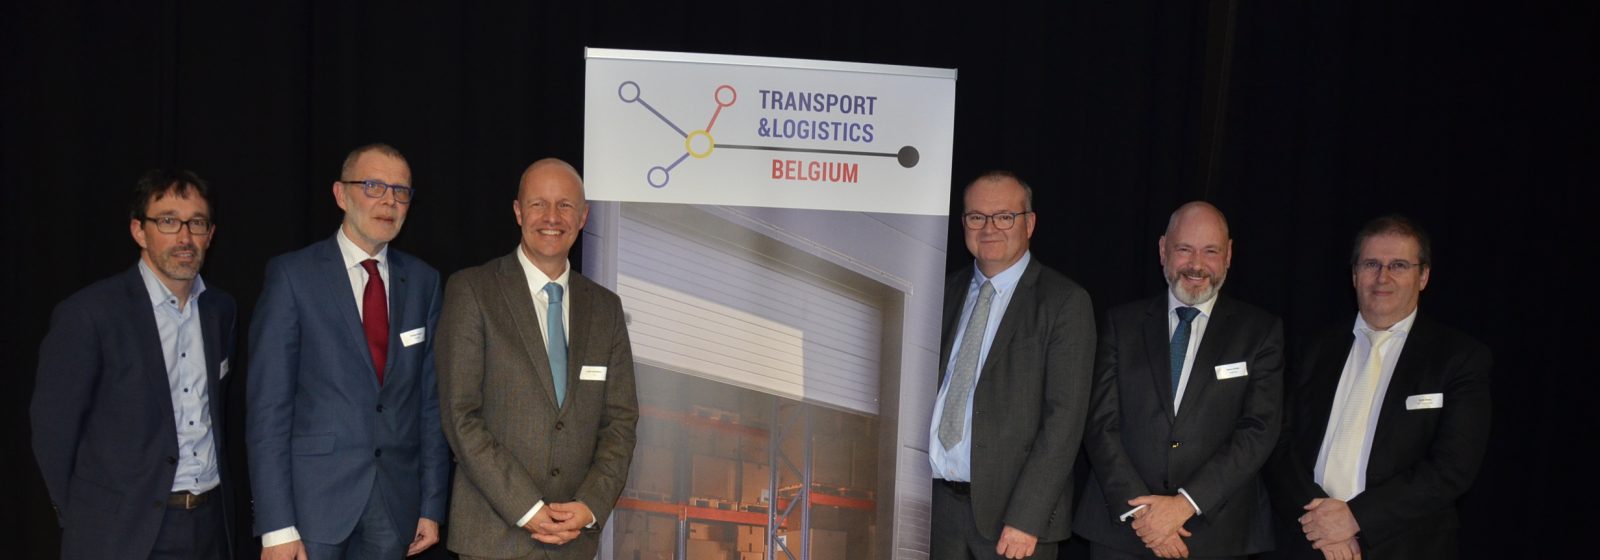 Drie transportfederaties vormen koepel Transport & Logistics Belgium